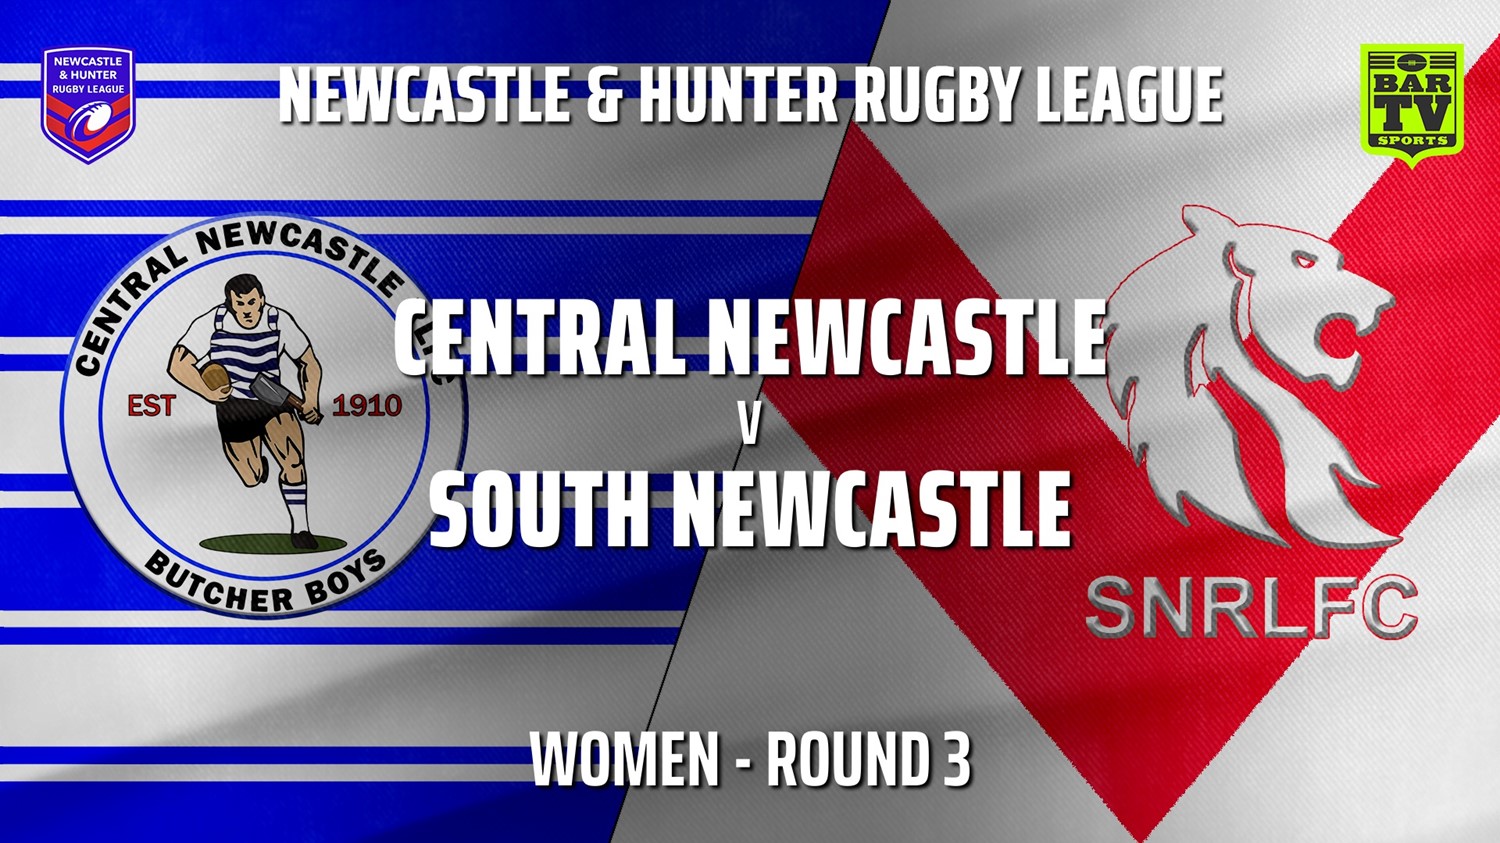 210502-NHRL Round 3 - Women - Central Newcastle v South Newcastle Slate Image